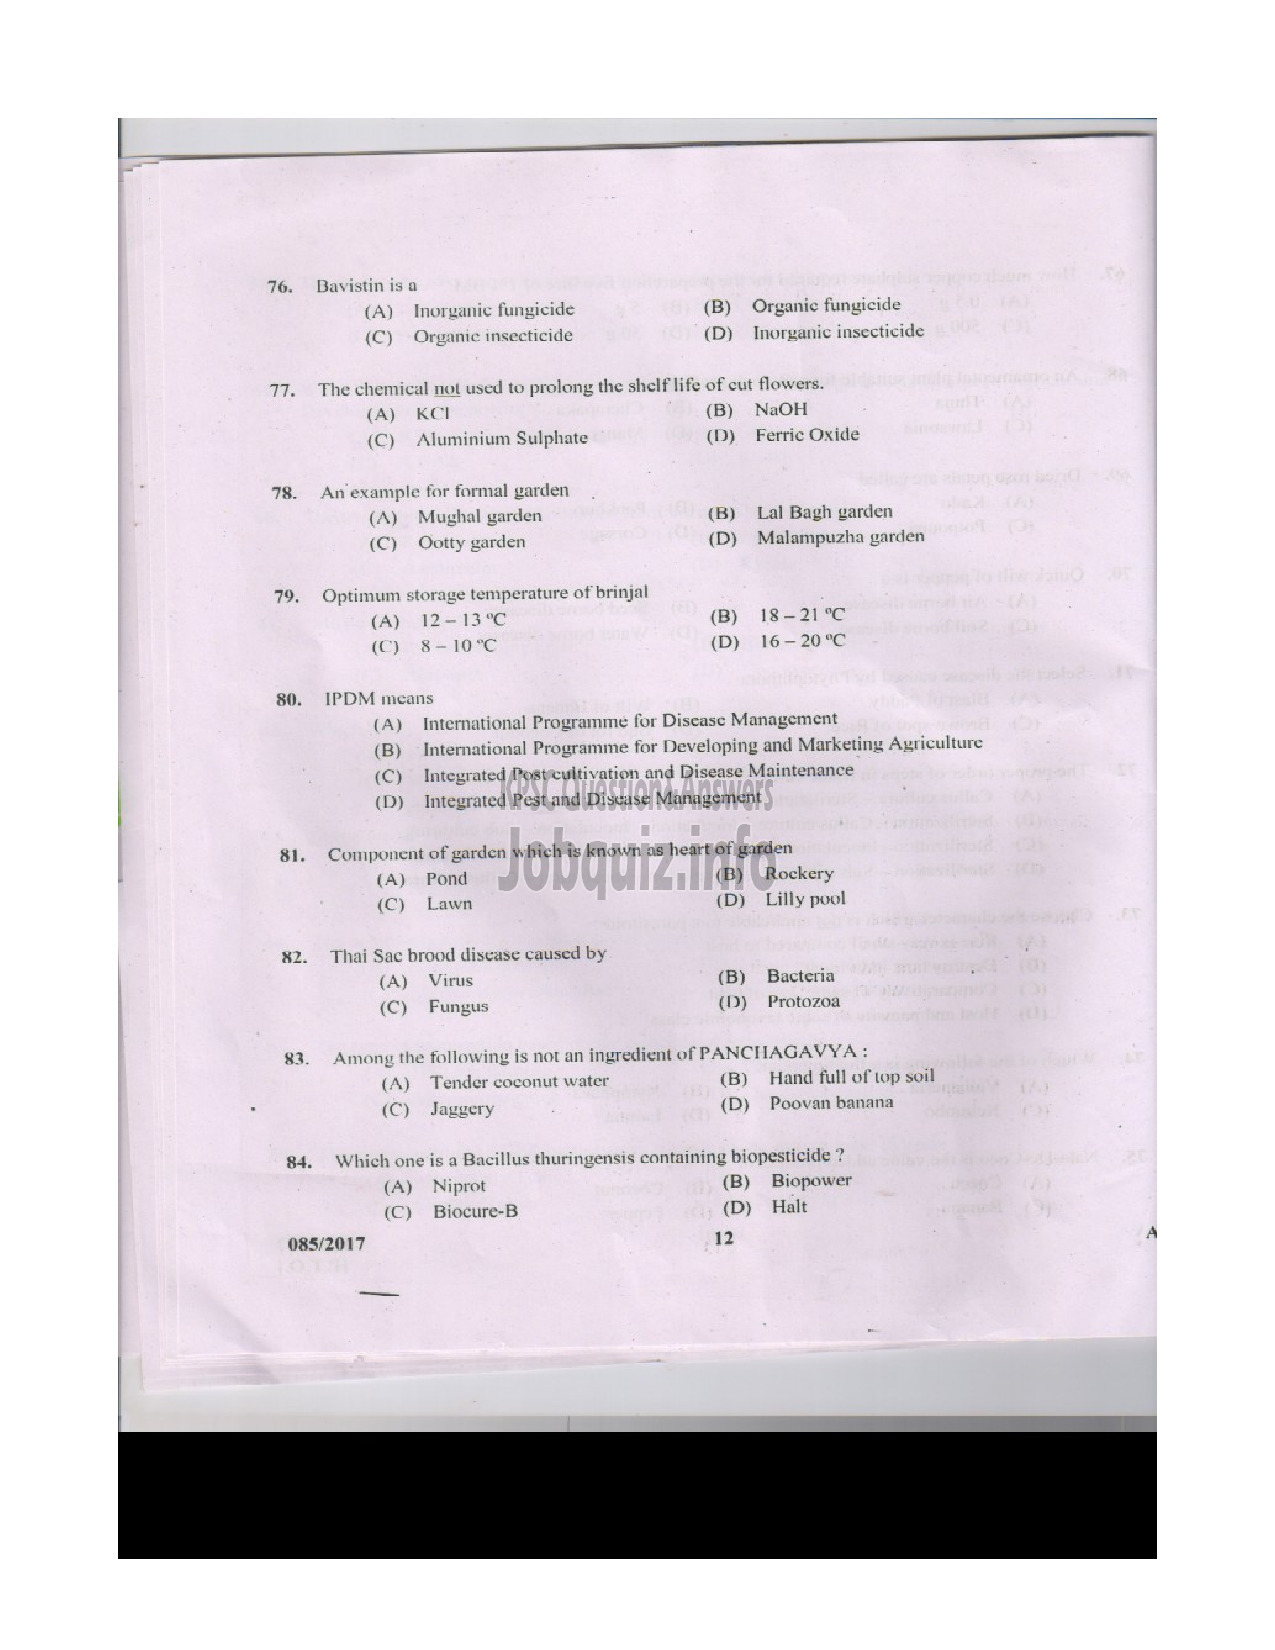 Kerala PSC Question Paper - AGRICULTURAL ASSISTANT GRADE II AGRICULTURE QUESTION PAPER-12